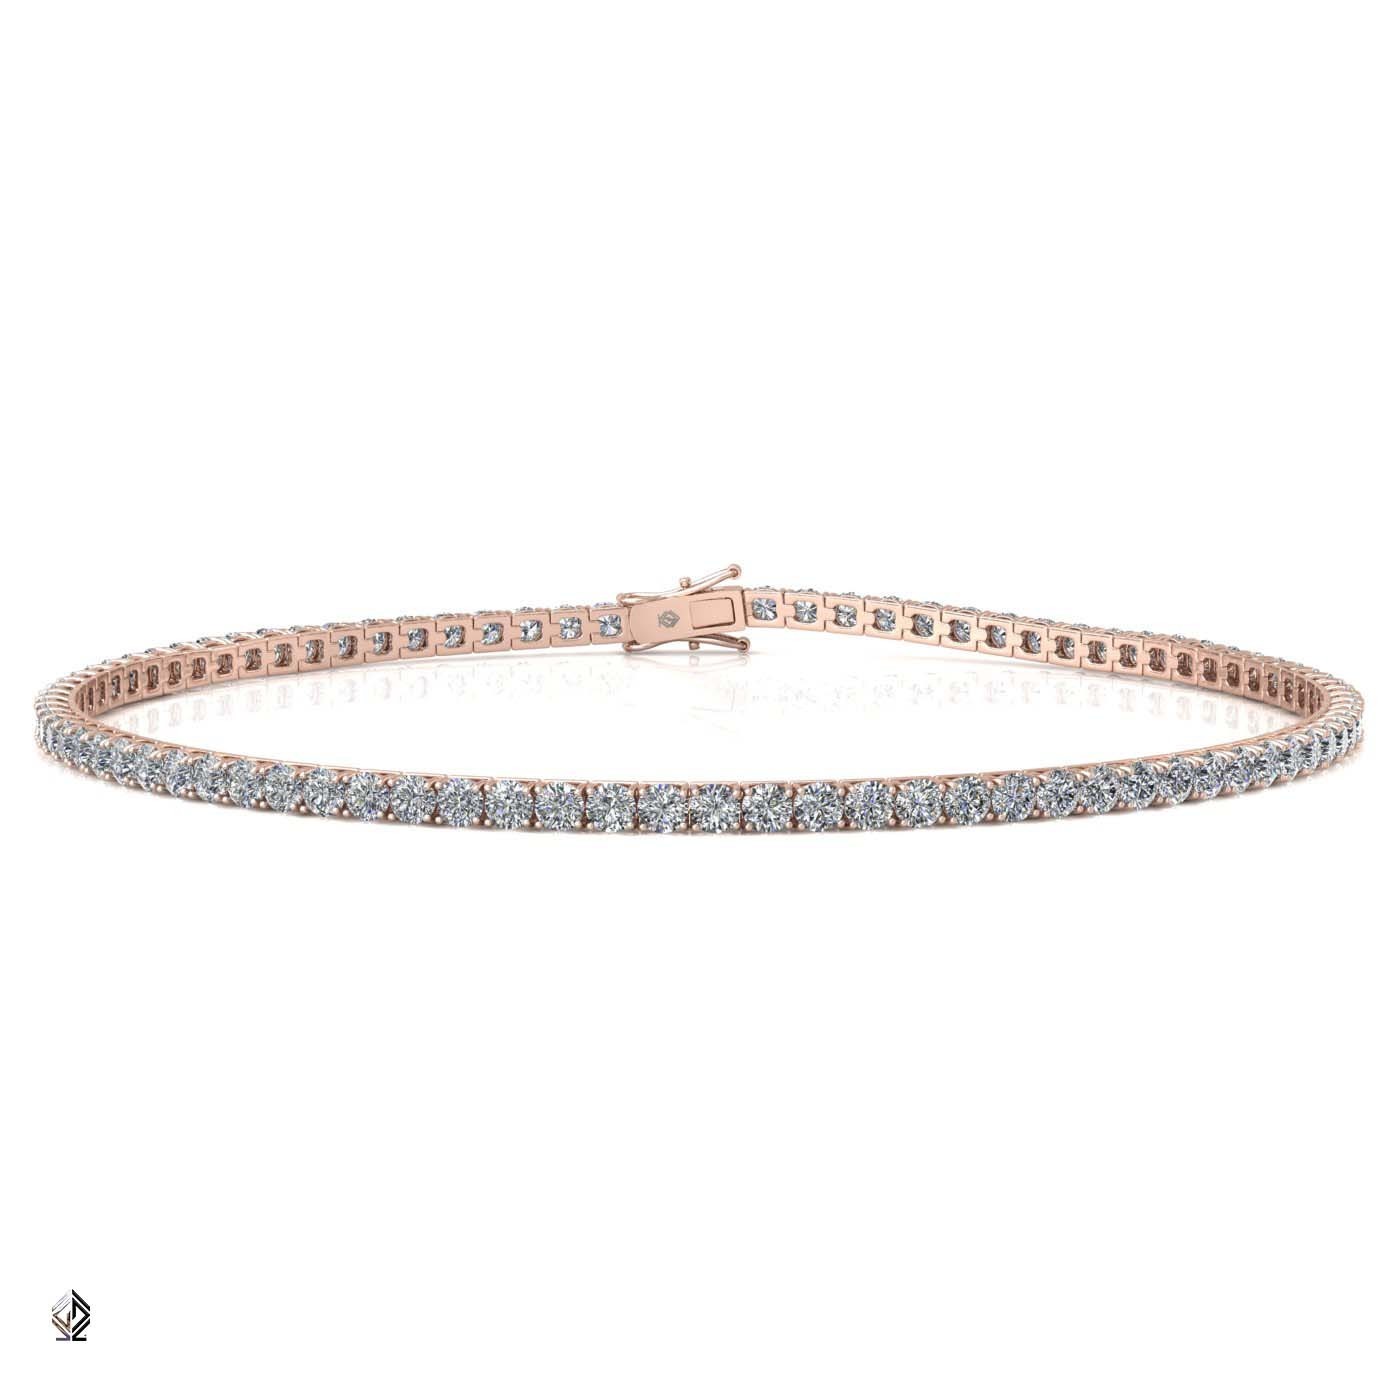 18k rose gold  1.8mm 4 prong round shape diamond tennis bracelet in square setting